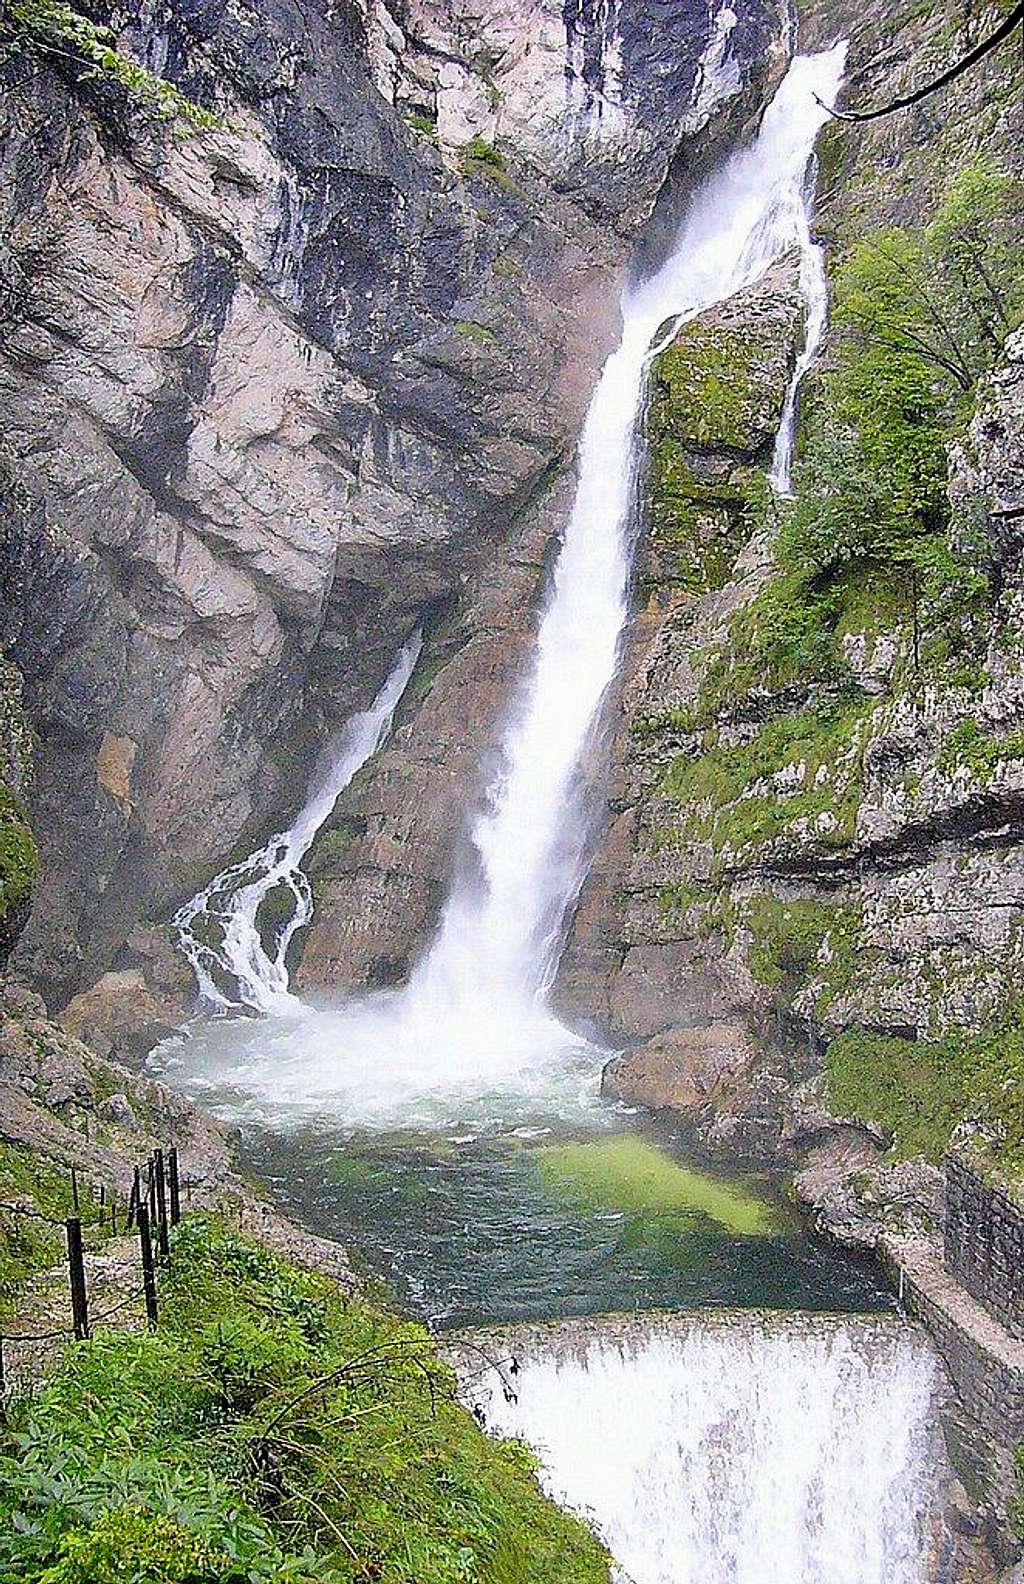 Savica Waterfall